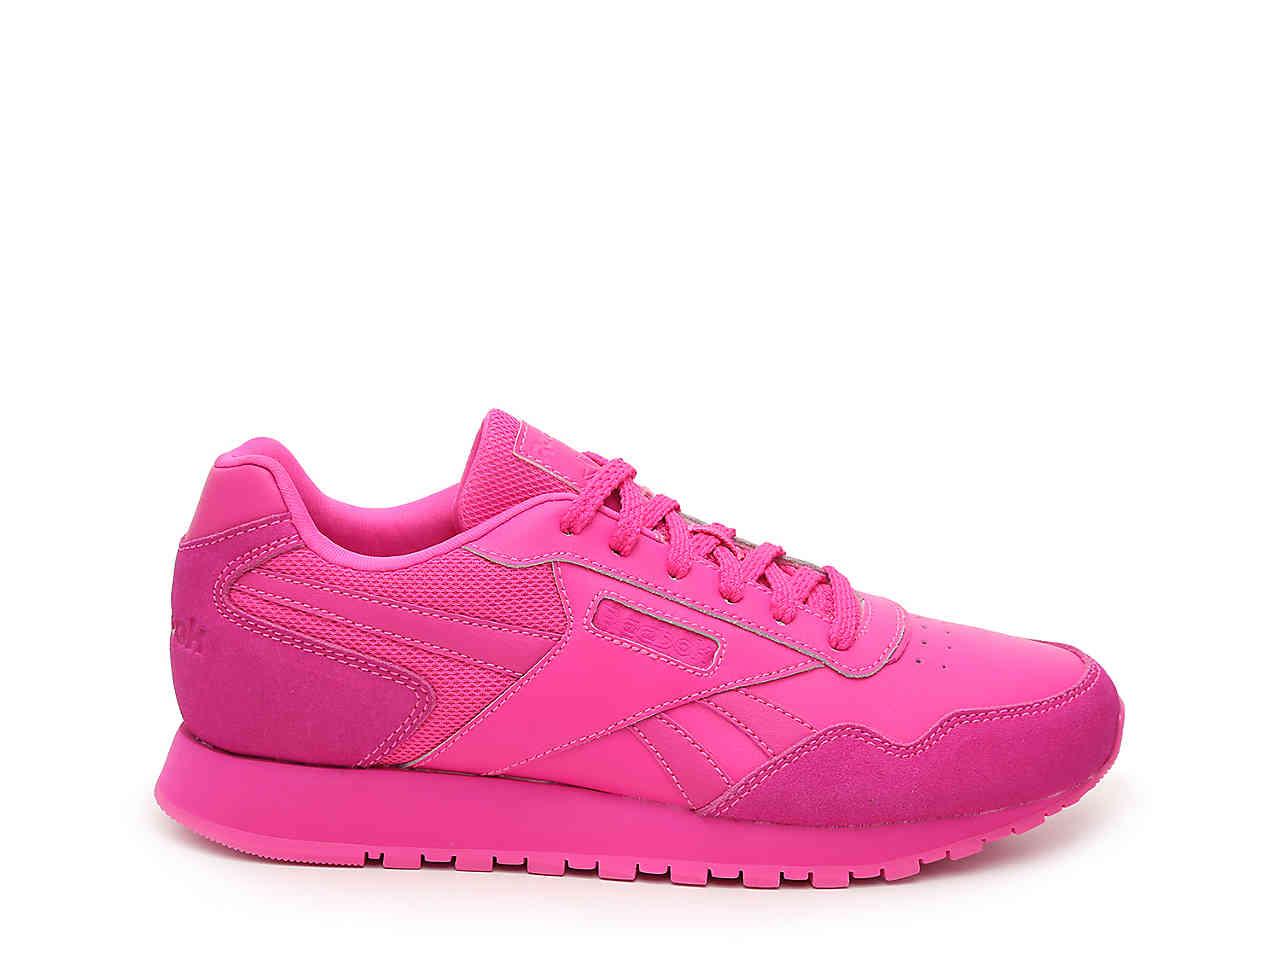 reebok hot pink shoes